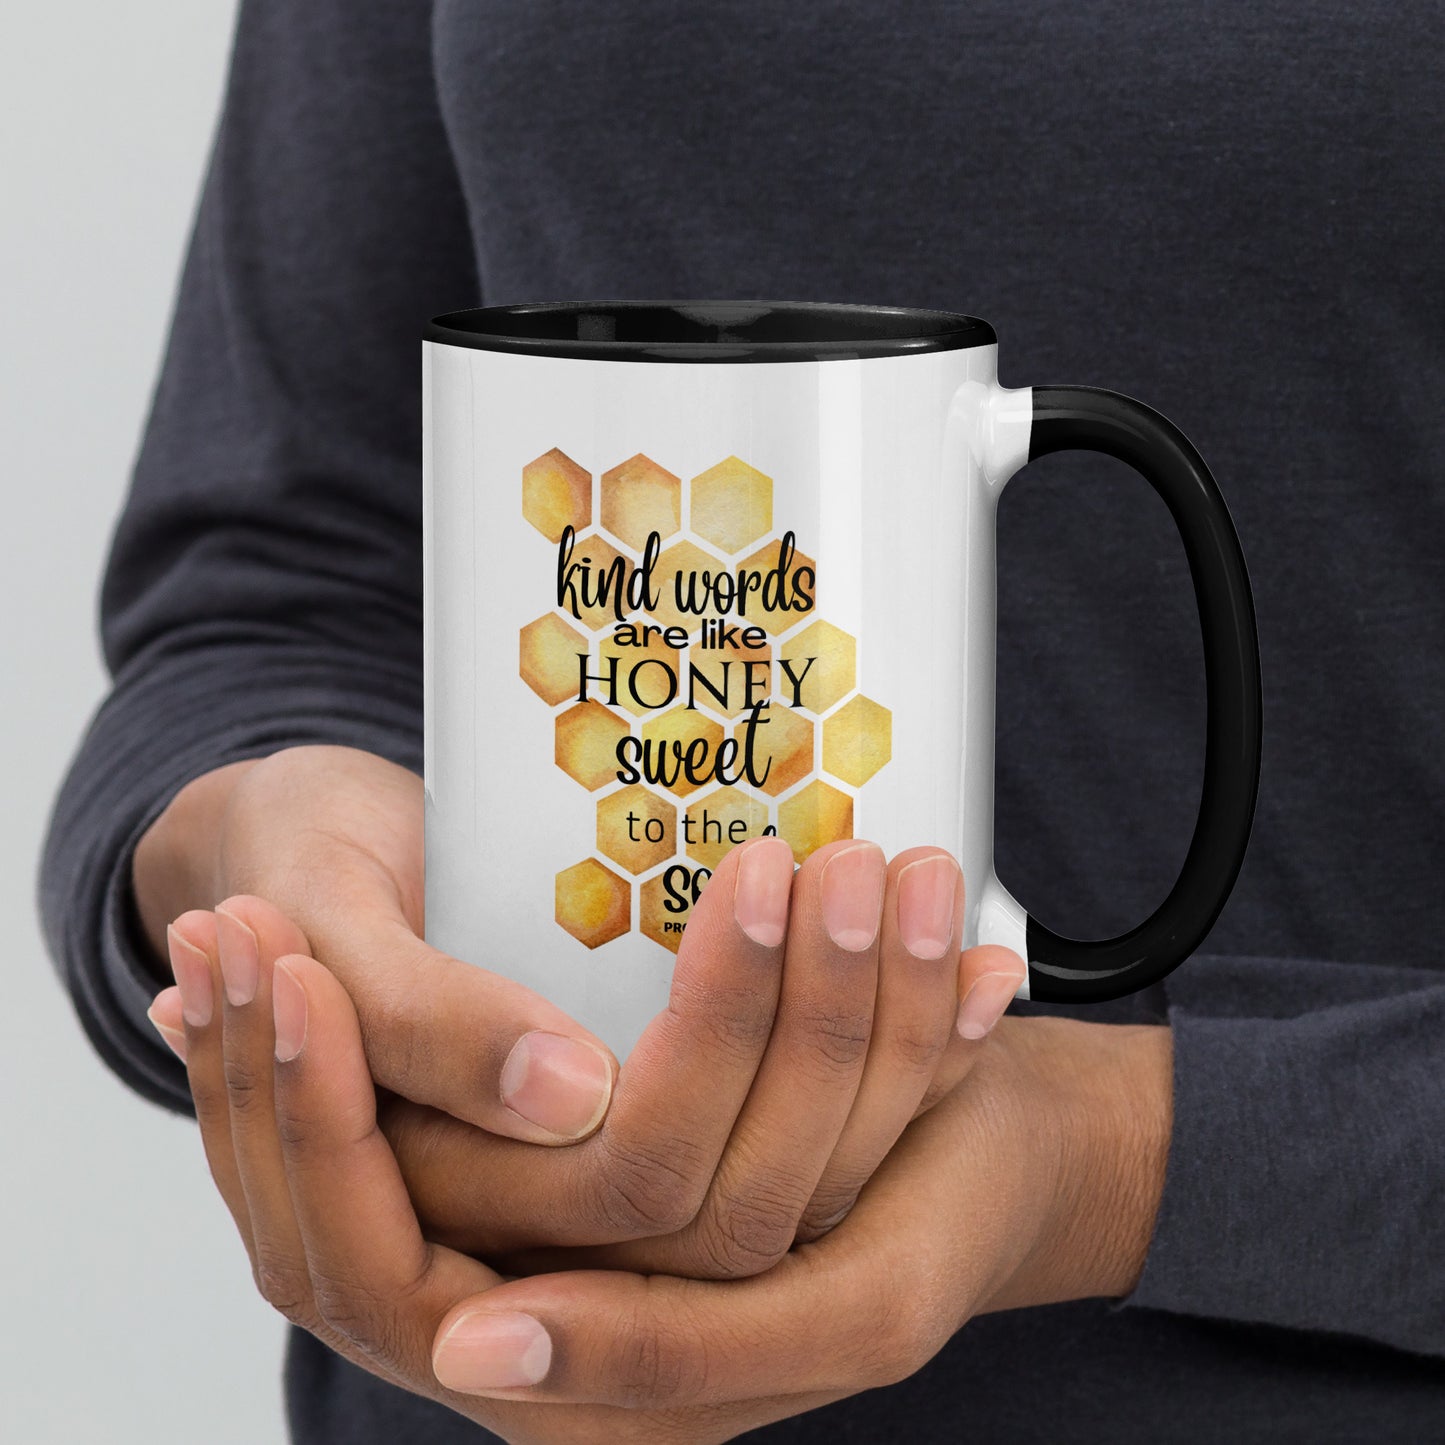 Kind words are like honey - mug with color